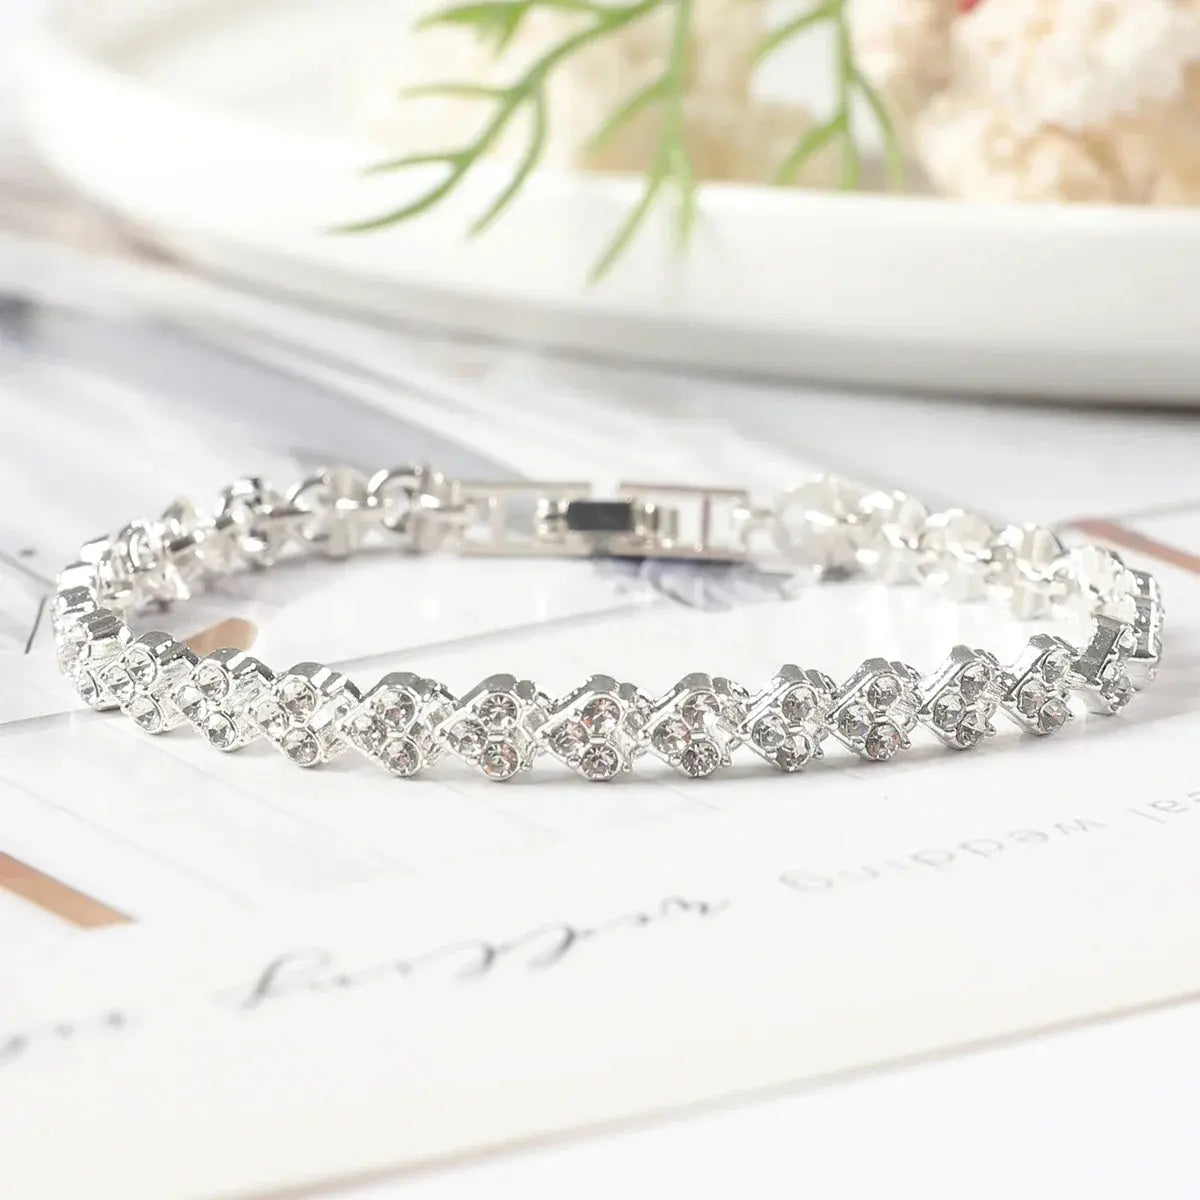 silver bracelet with rhinestones placed in heart shape